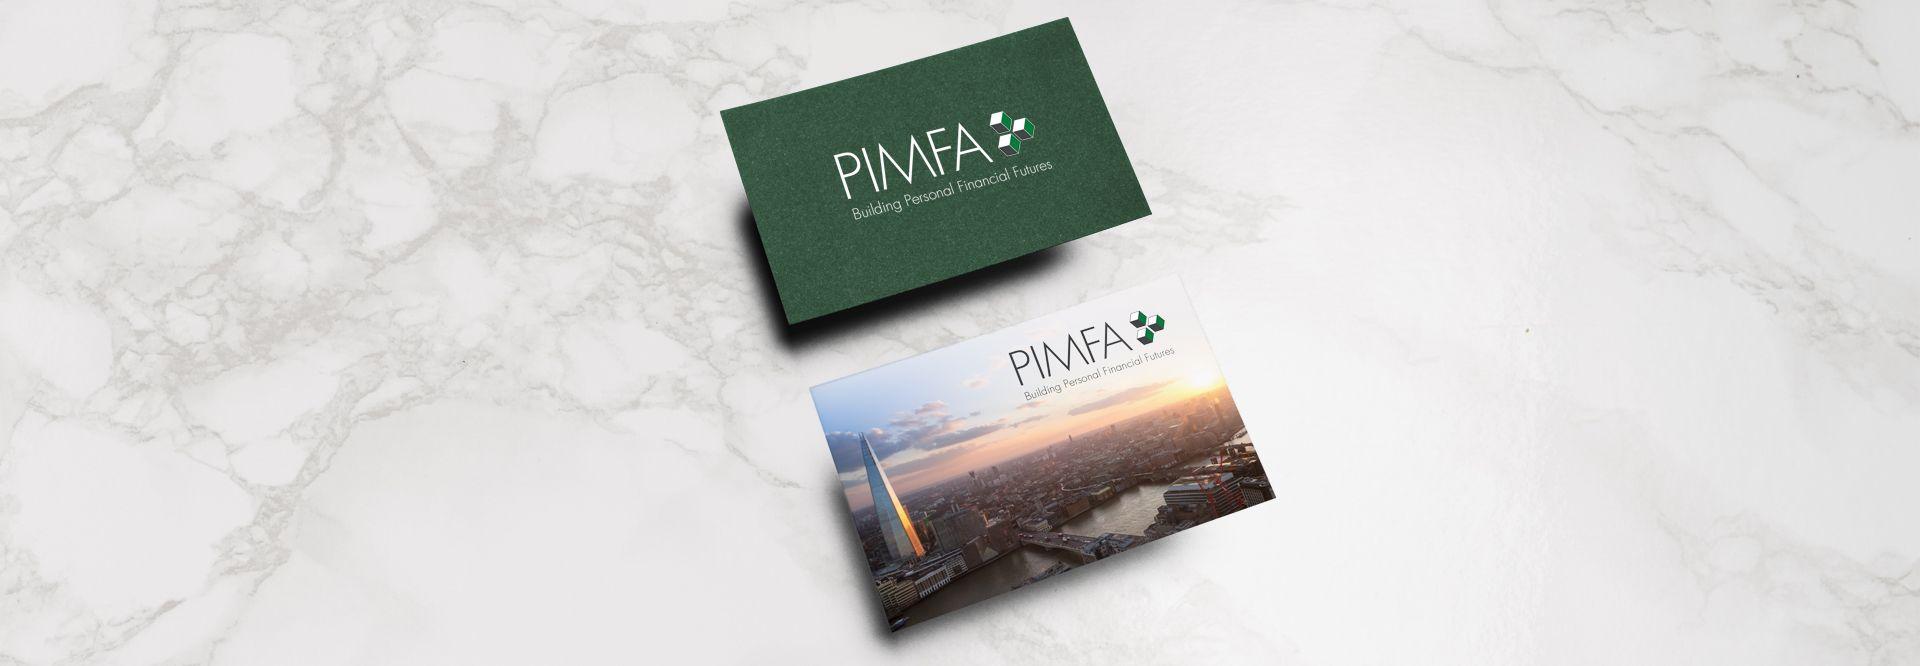 Personal Product Logo - PIMFA Logo and Brand Development